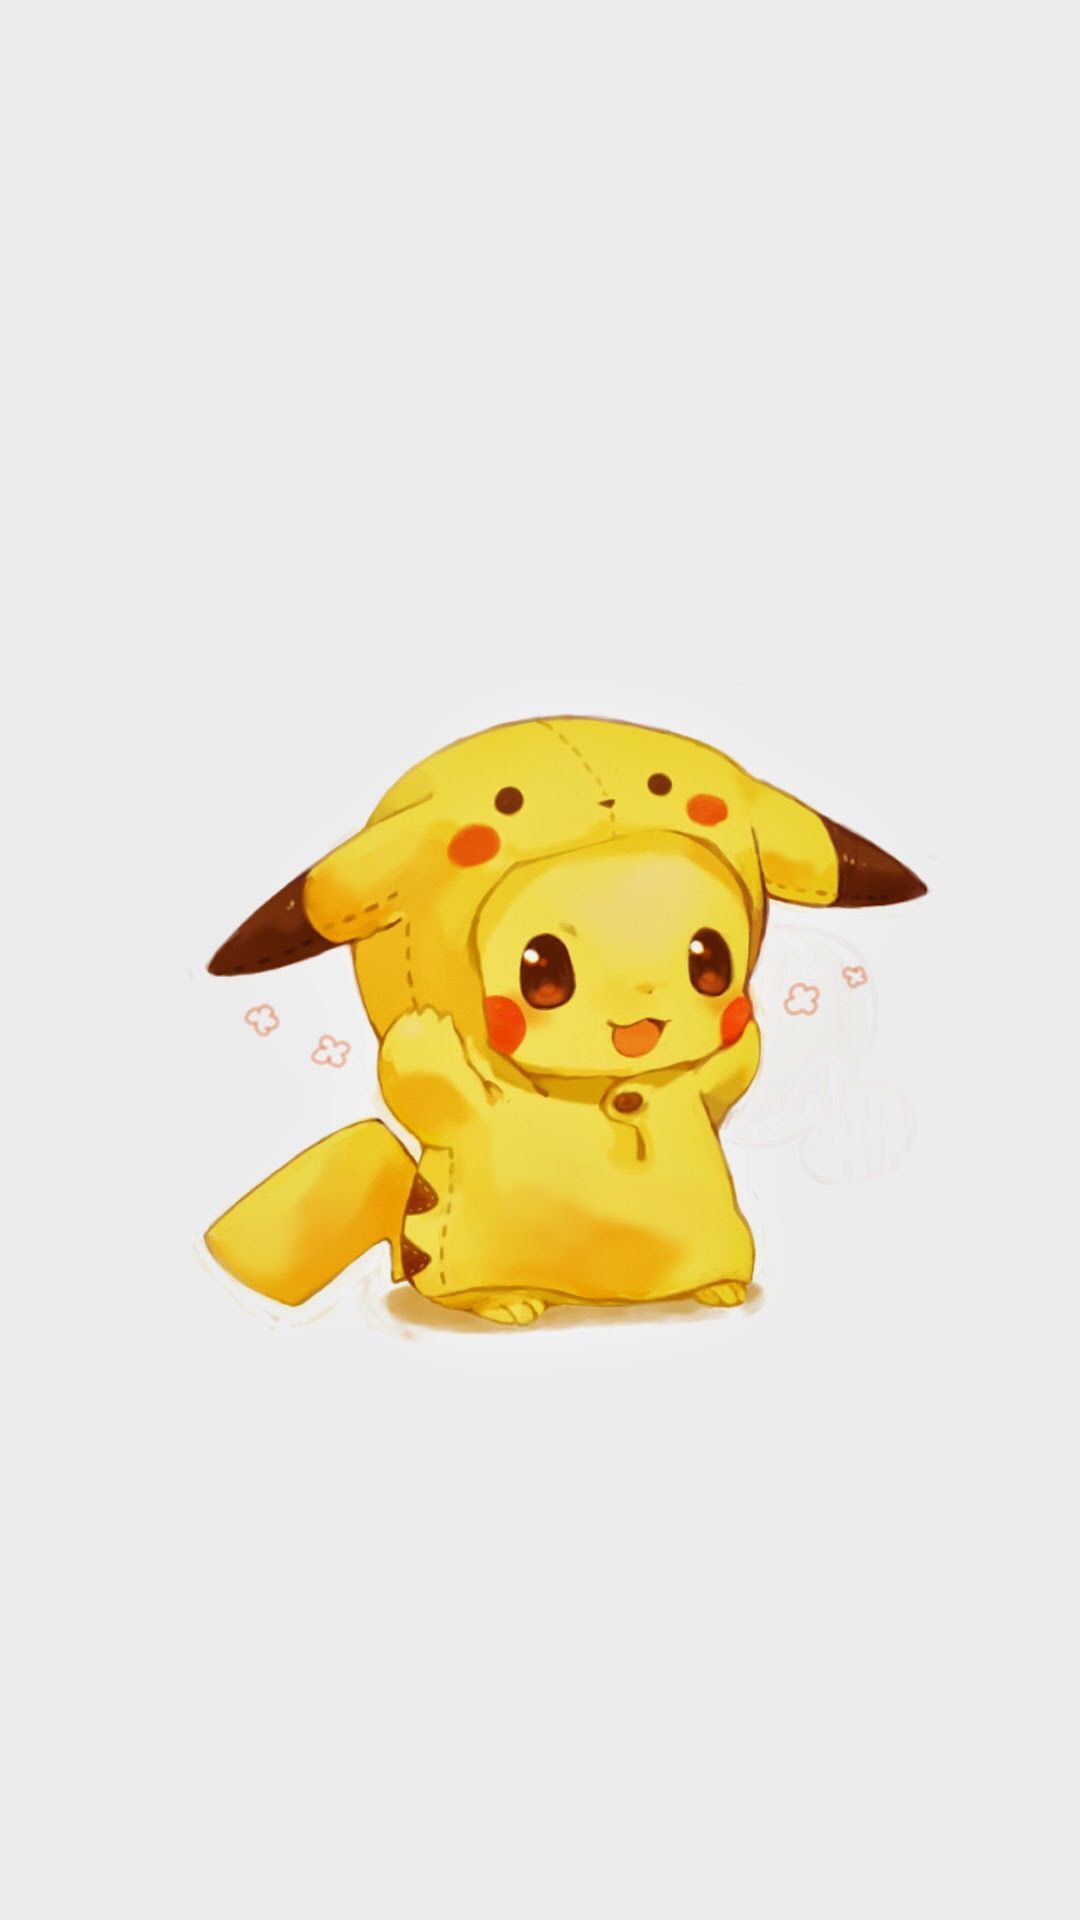 Pokémon IPhone 5 wallpapers on Behance